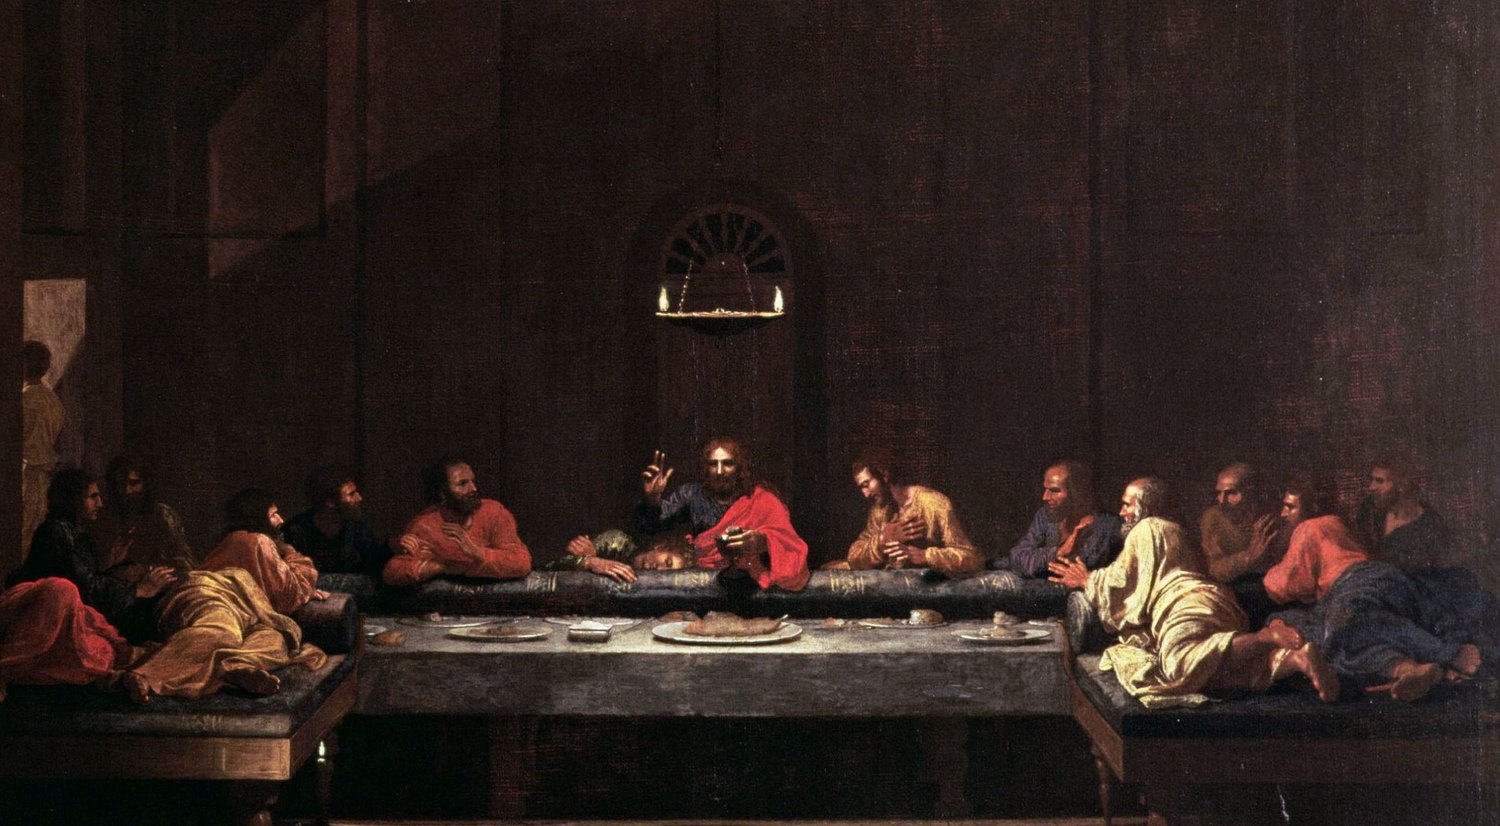   The Last Supper - Nicolas Poussin, 1640-1649  